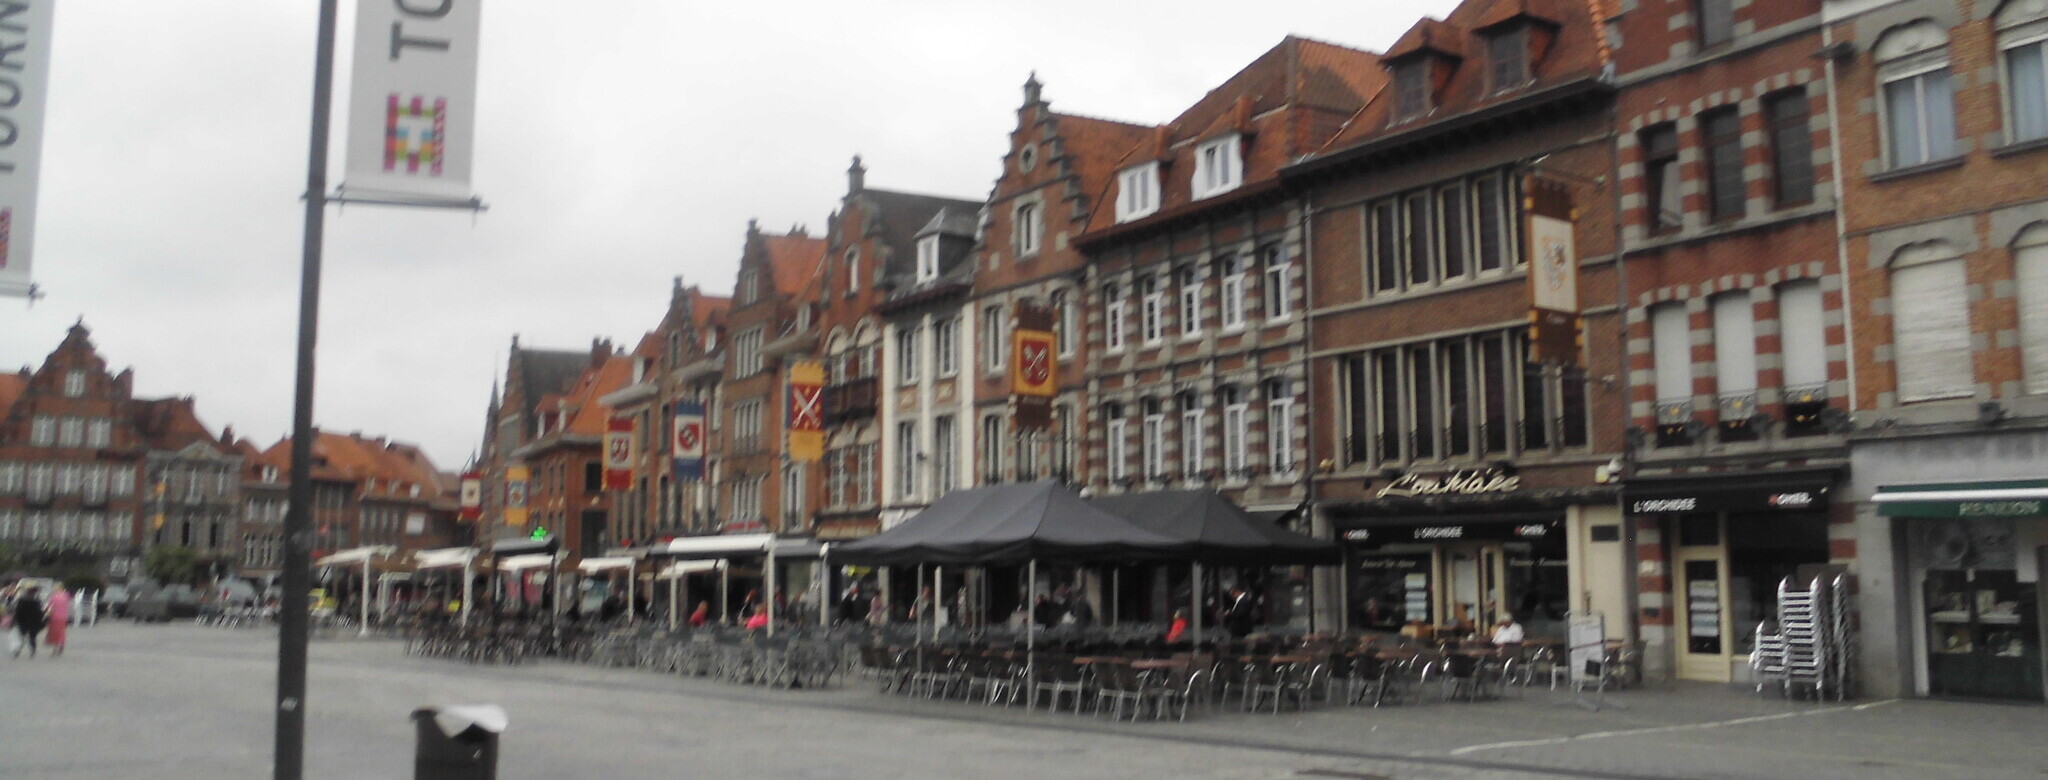 Marktplatz in Tournai